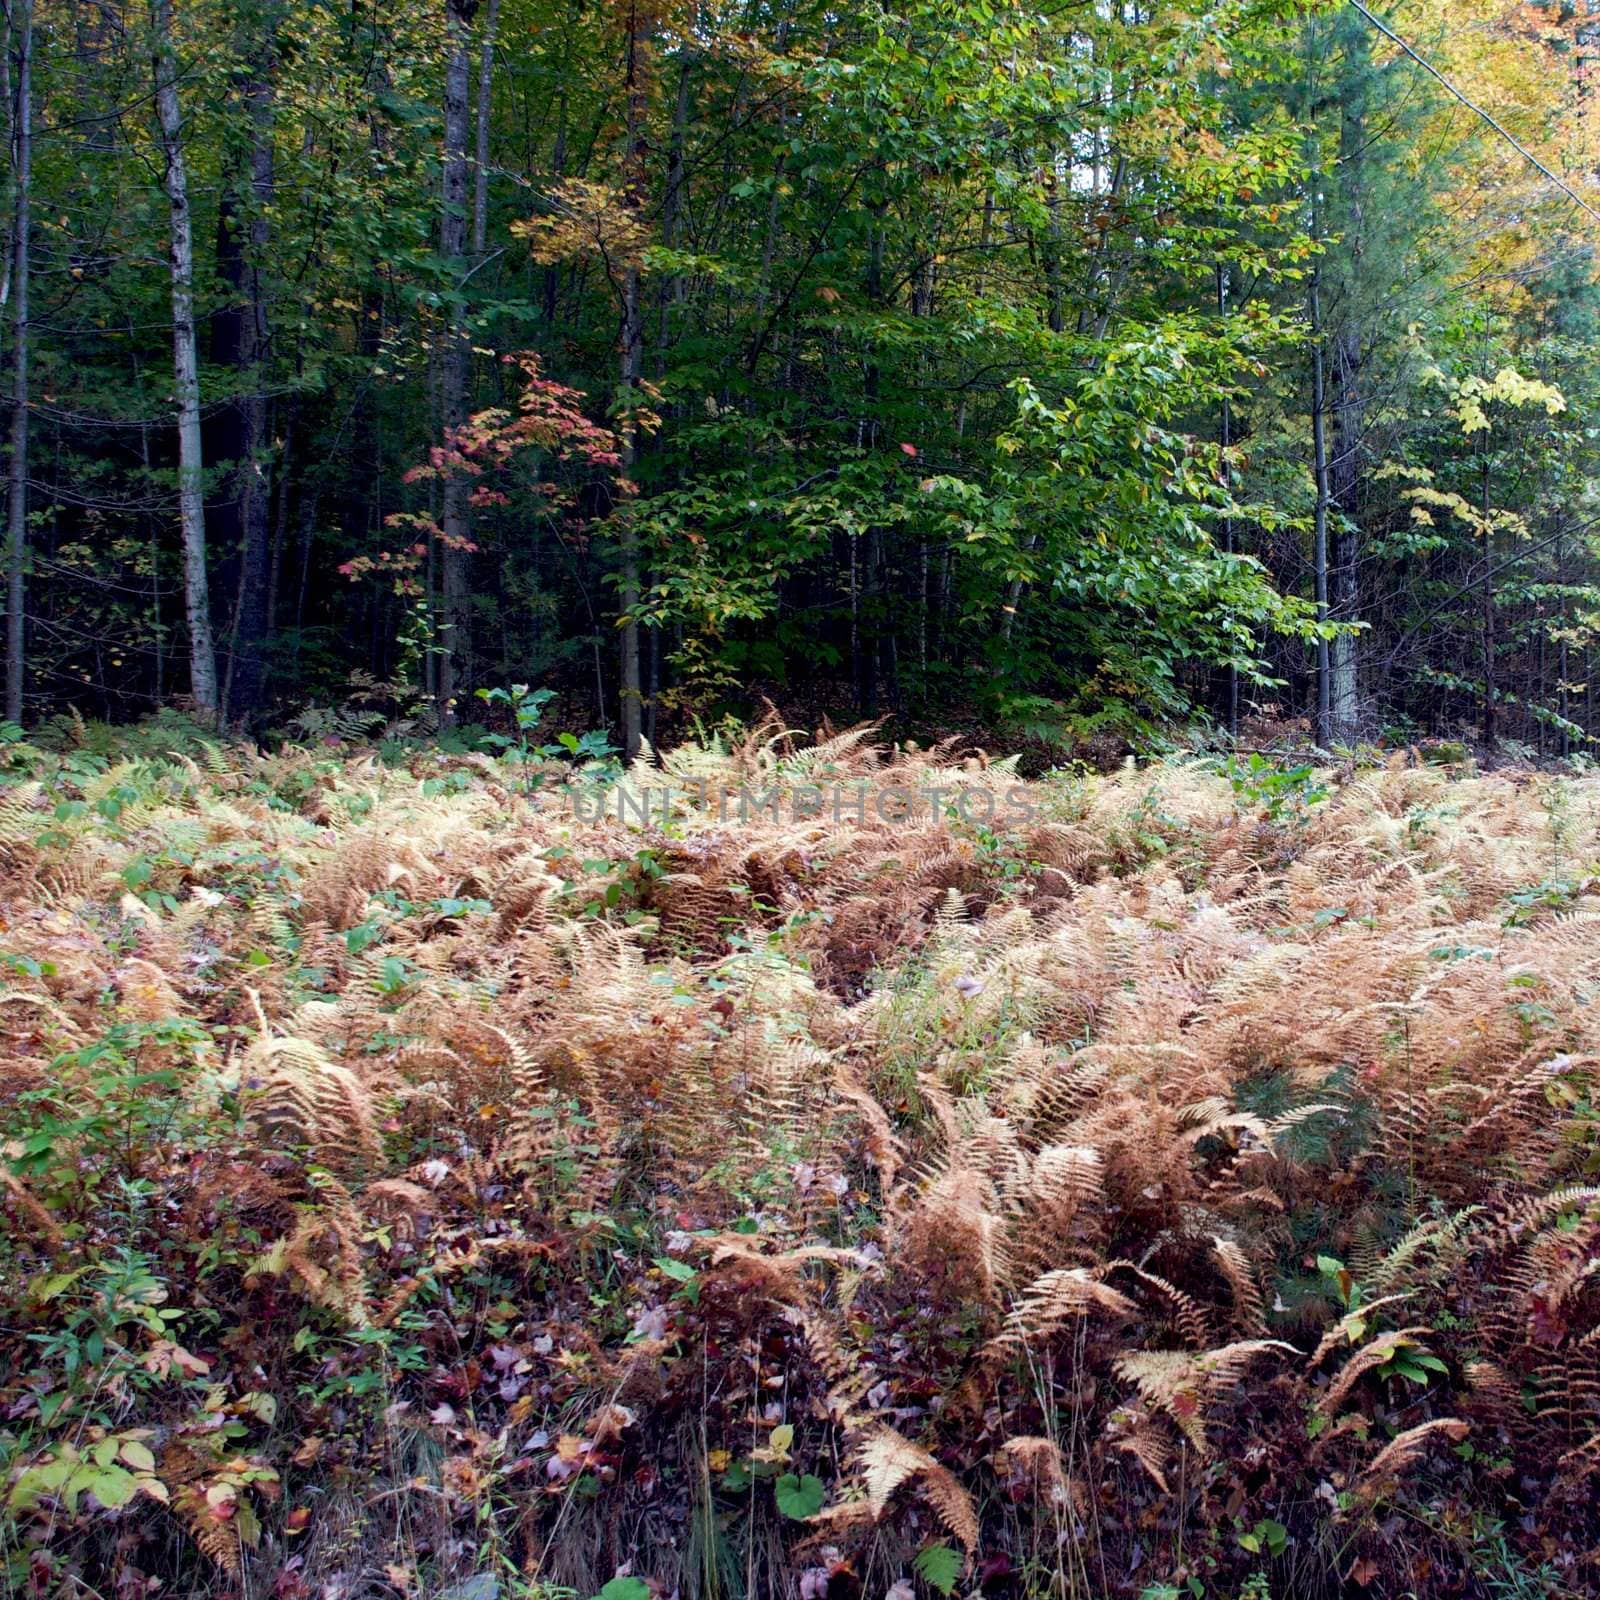 Small town of Ludlow Vermont during foliage season